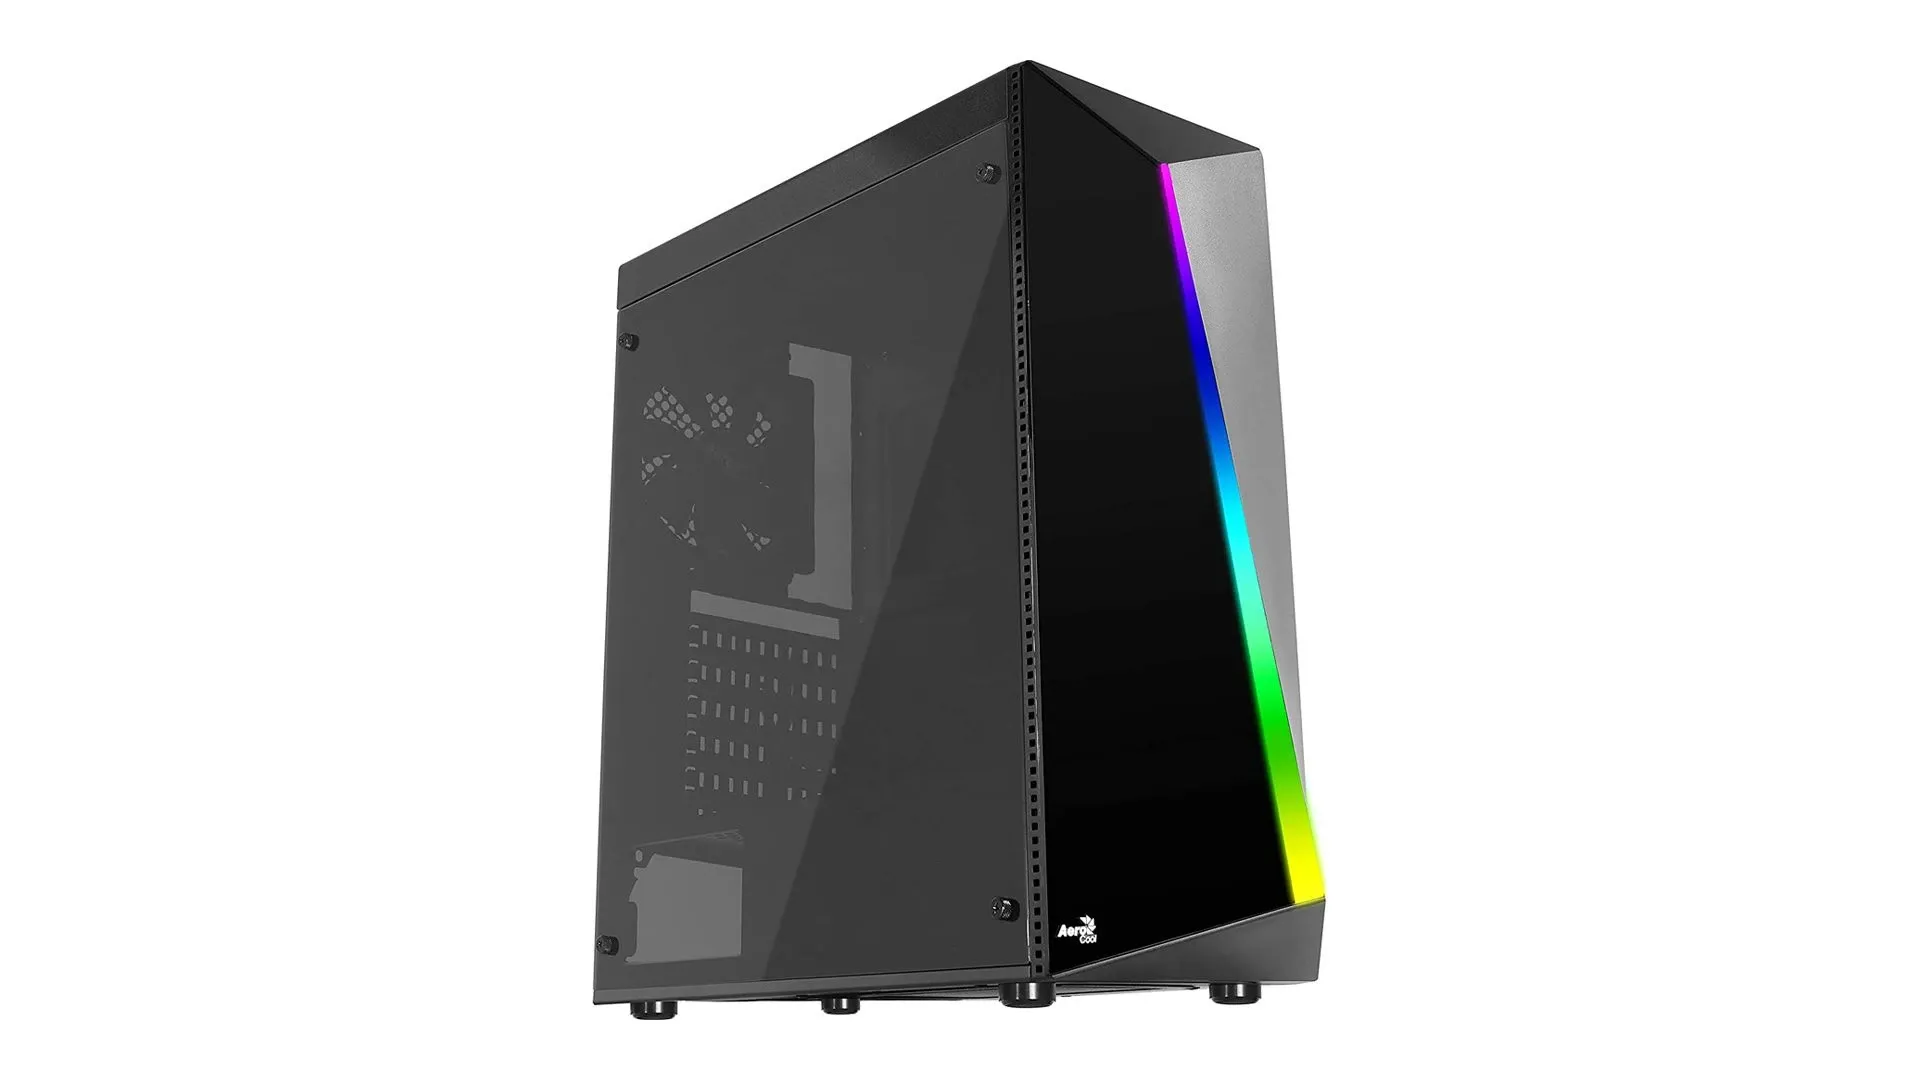 Gabinete preto Aerocool Shard Acrylic com faixa simulando arco-íris